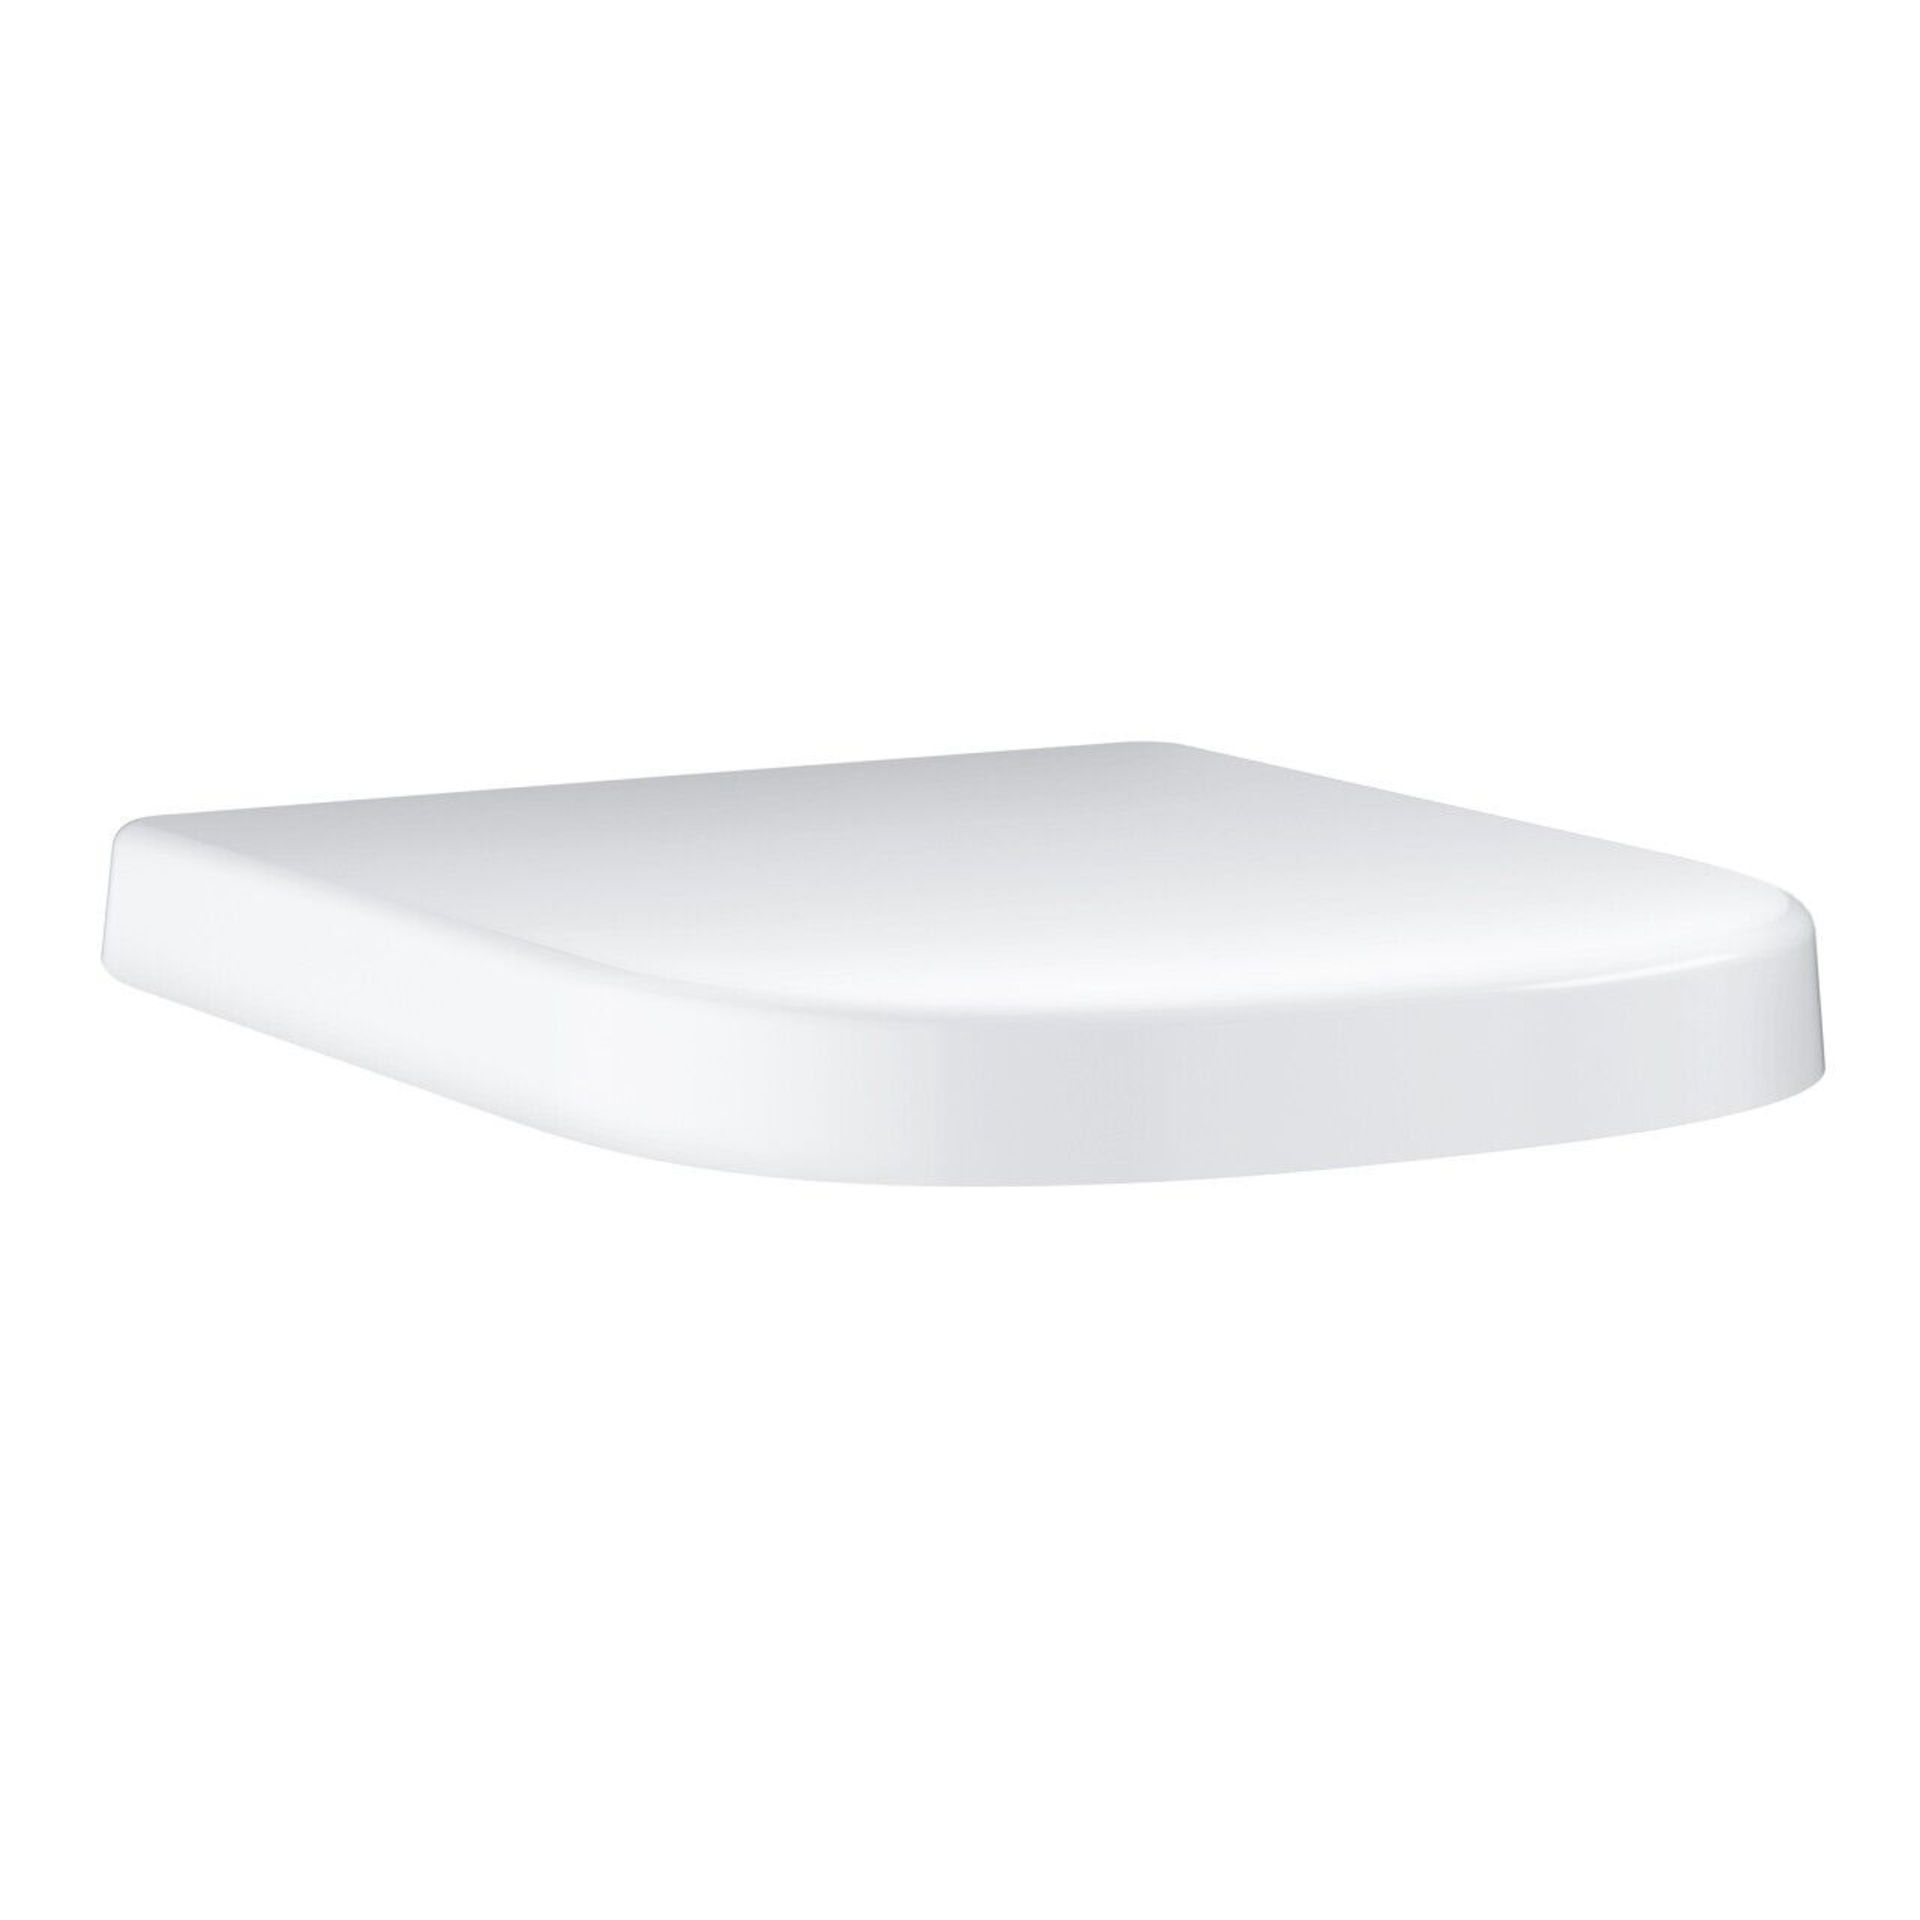 Grohe Euro Ceramic Toilet Seat, Soft Close, White (39330001) - Image 2 of 3